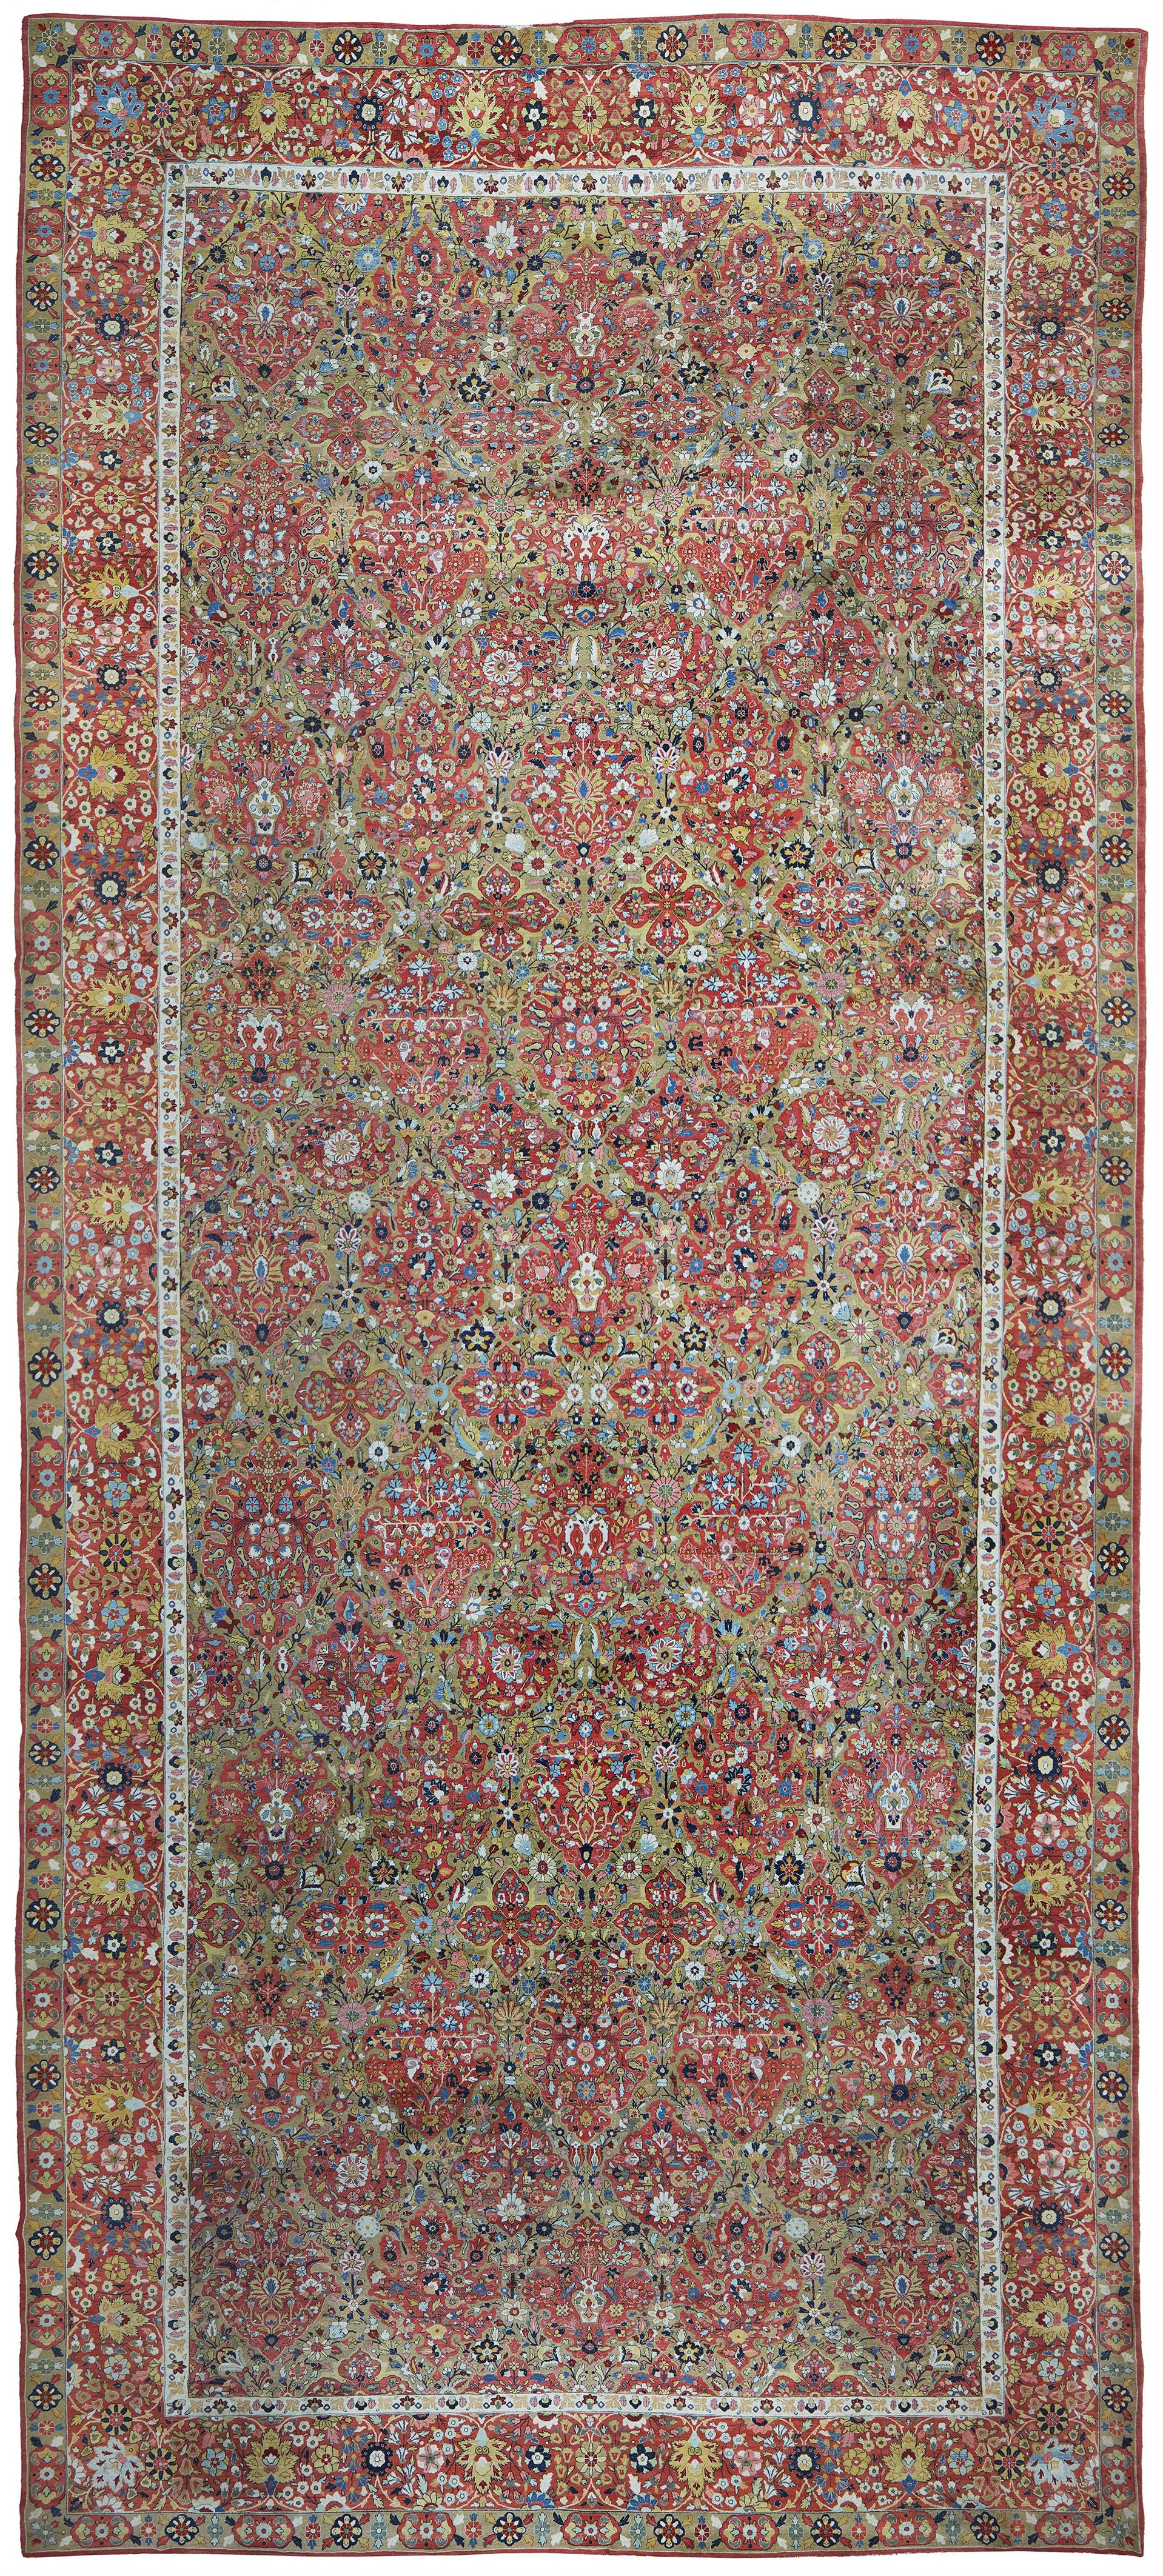 The Cologne City Hall Carpets
A large Iranian carpet - image-1